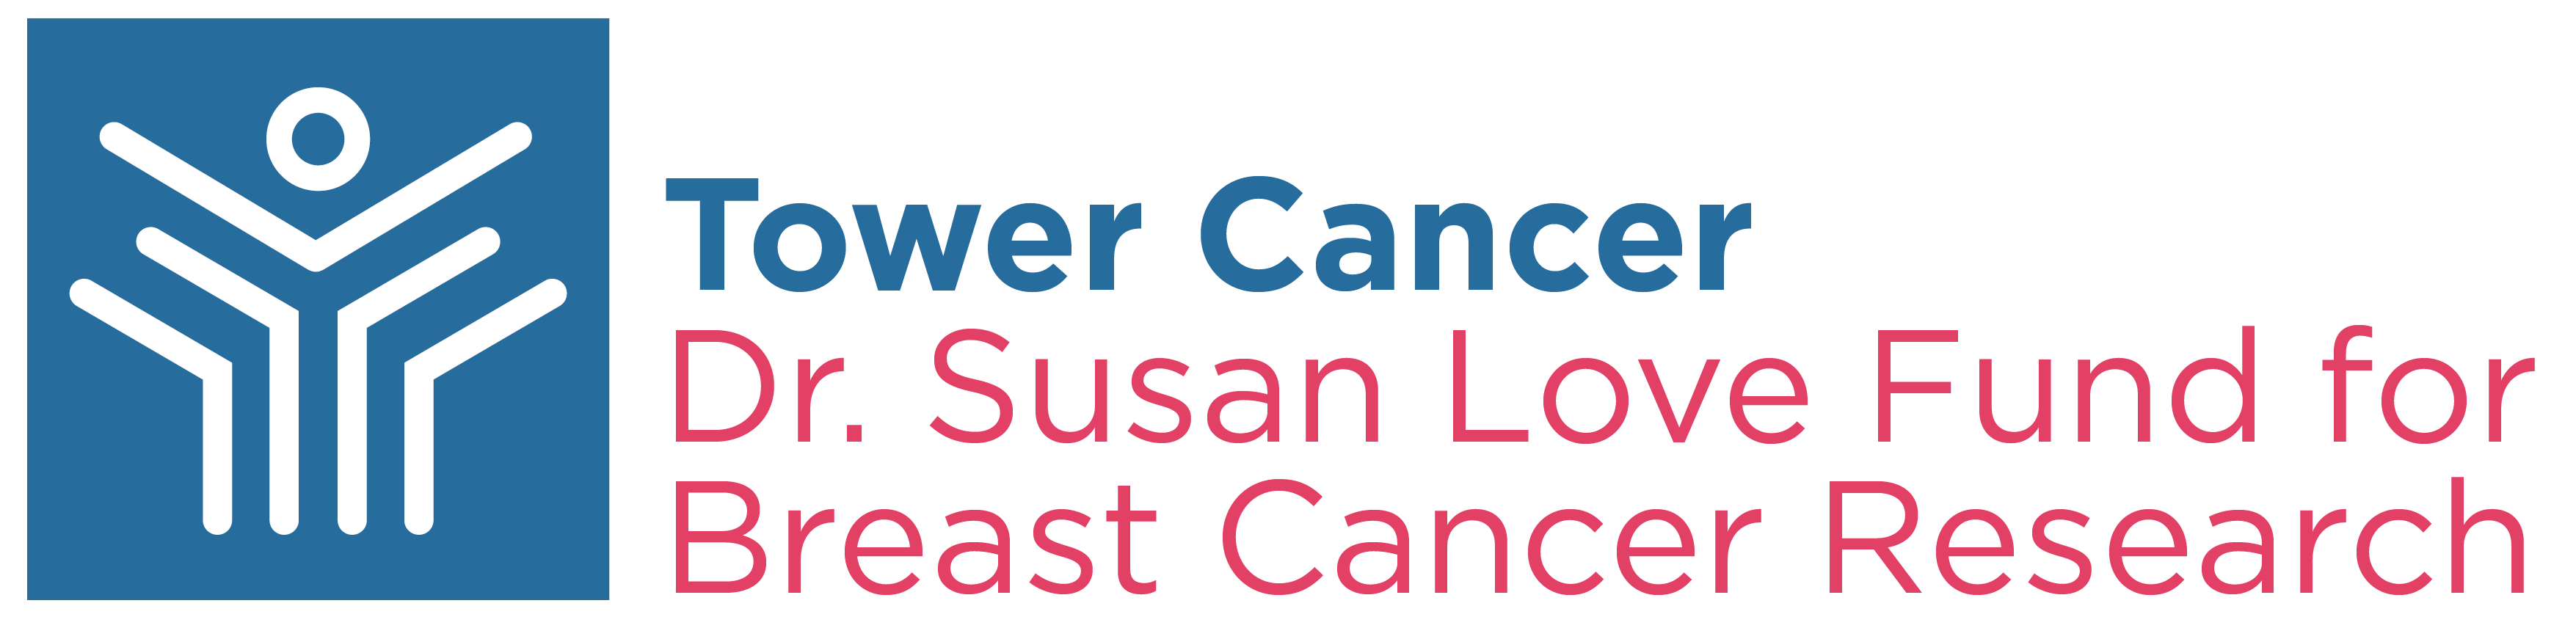 Tower Cancer Dr Susan Love Fund Logo